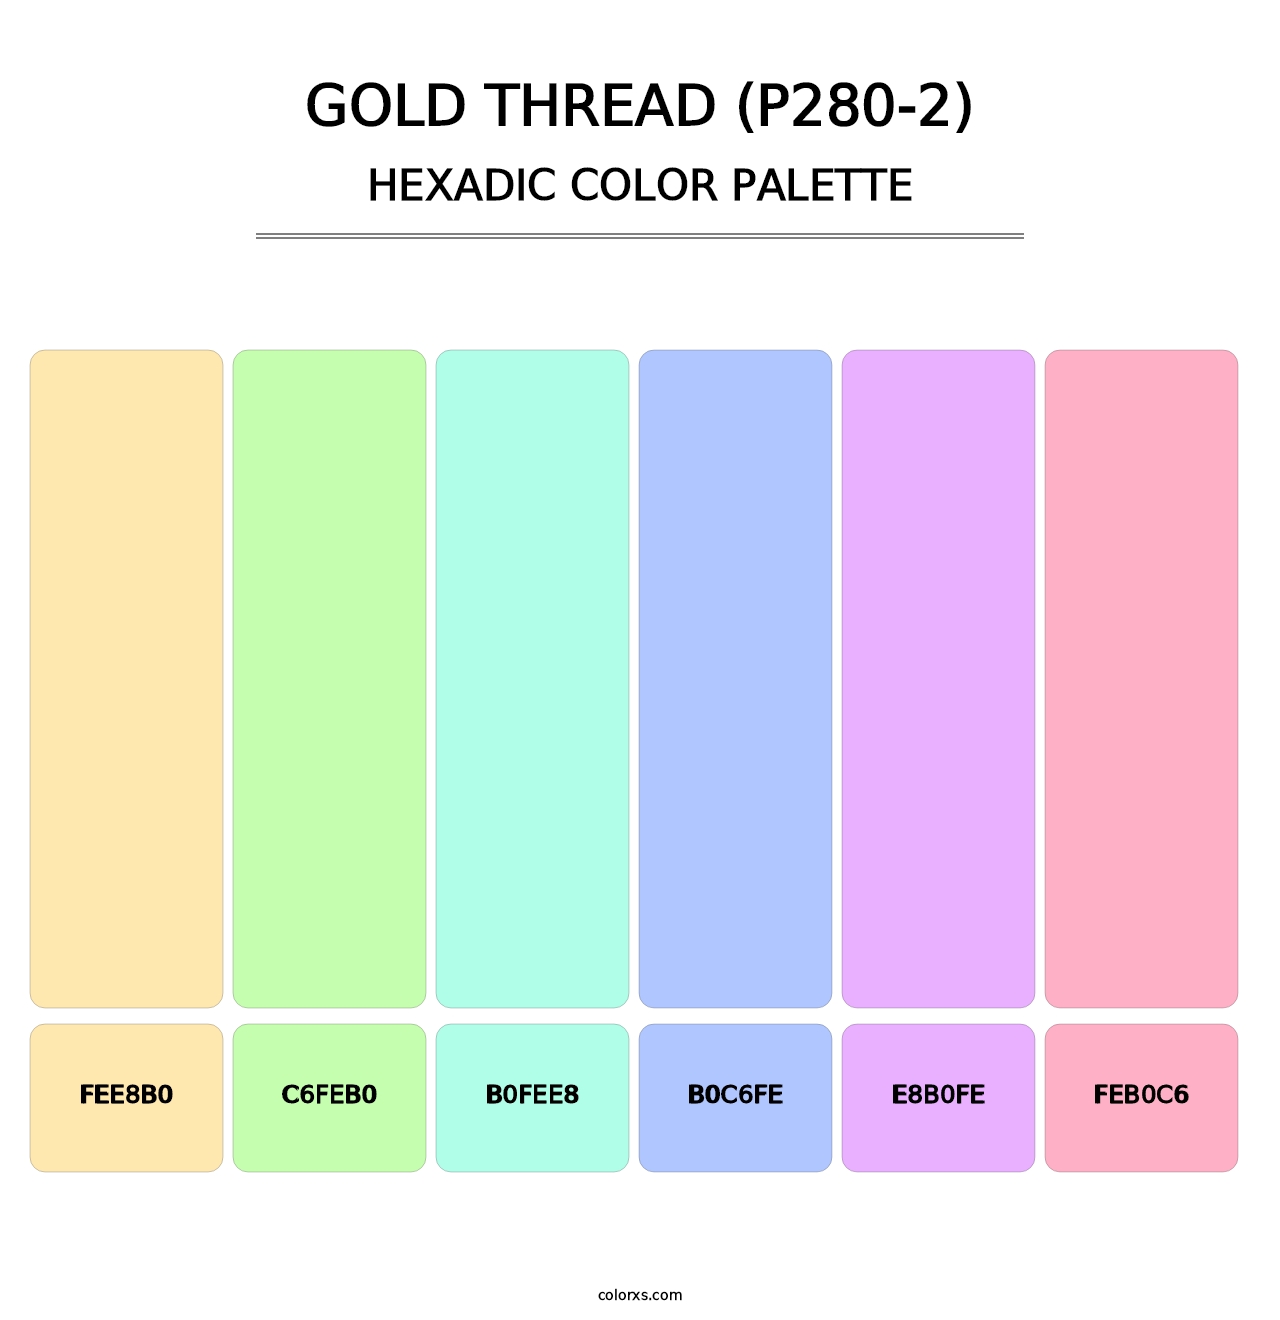 Gold Thread (P280-2) - Hexadic Color Palette